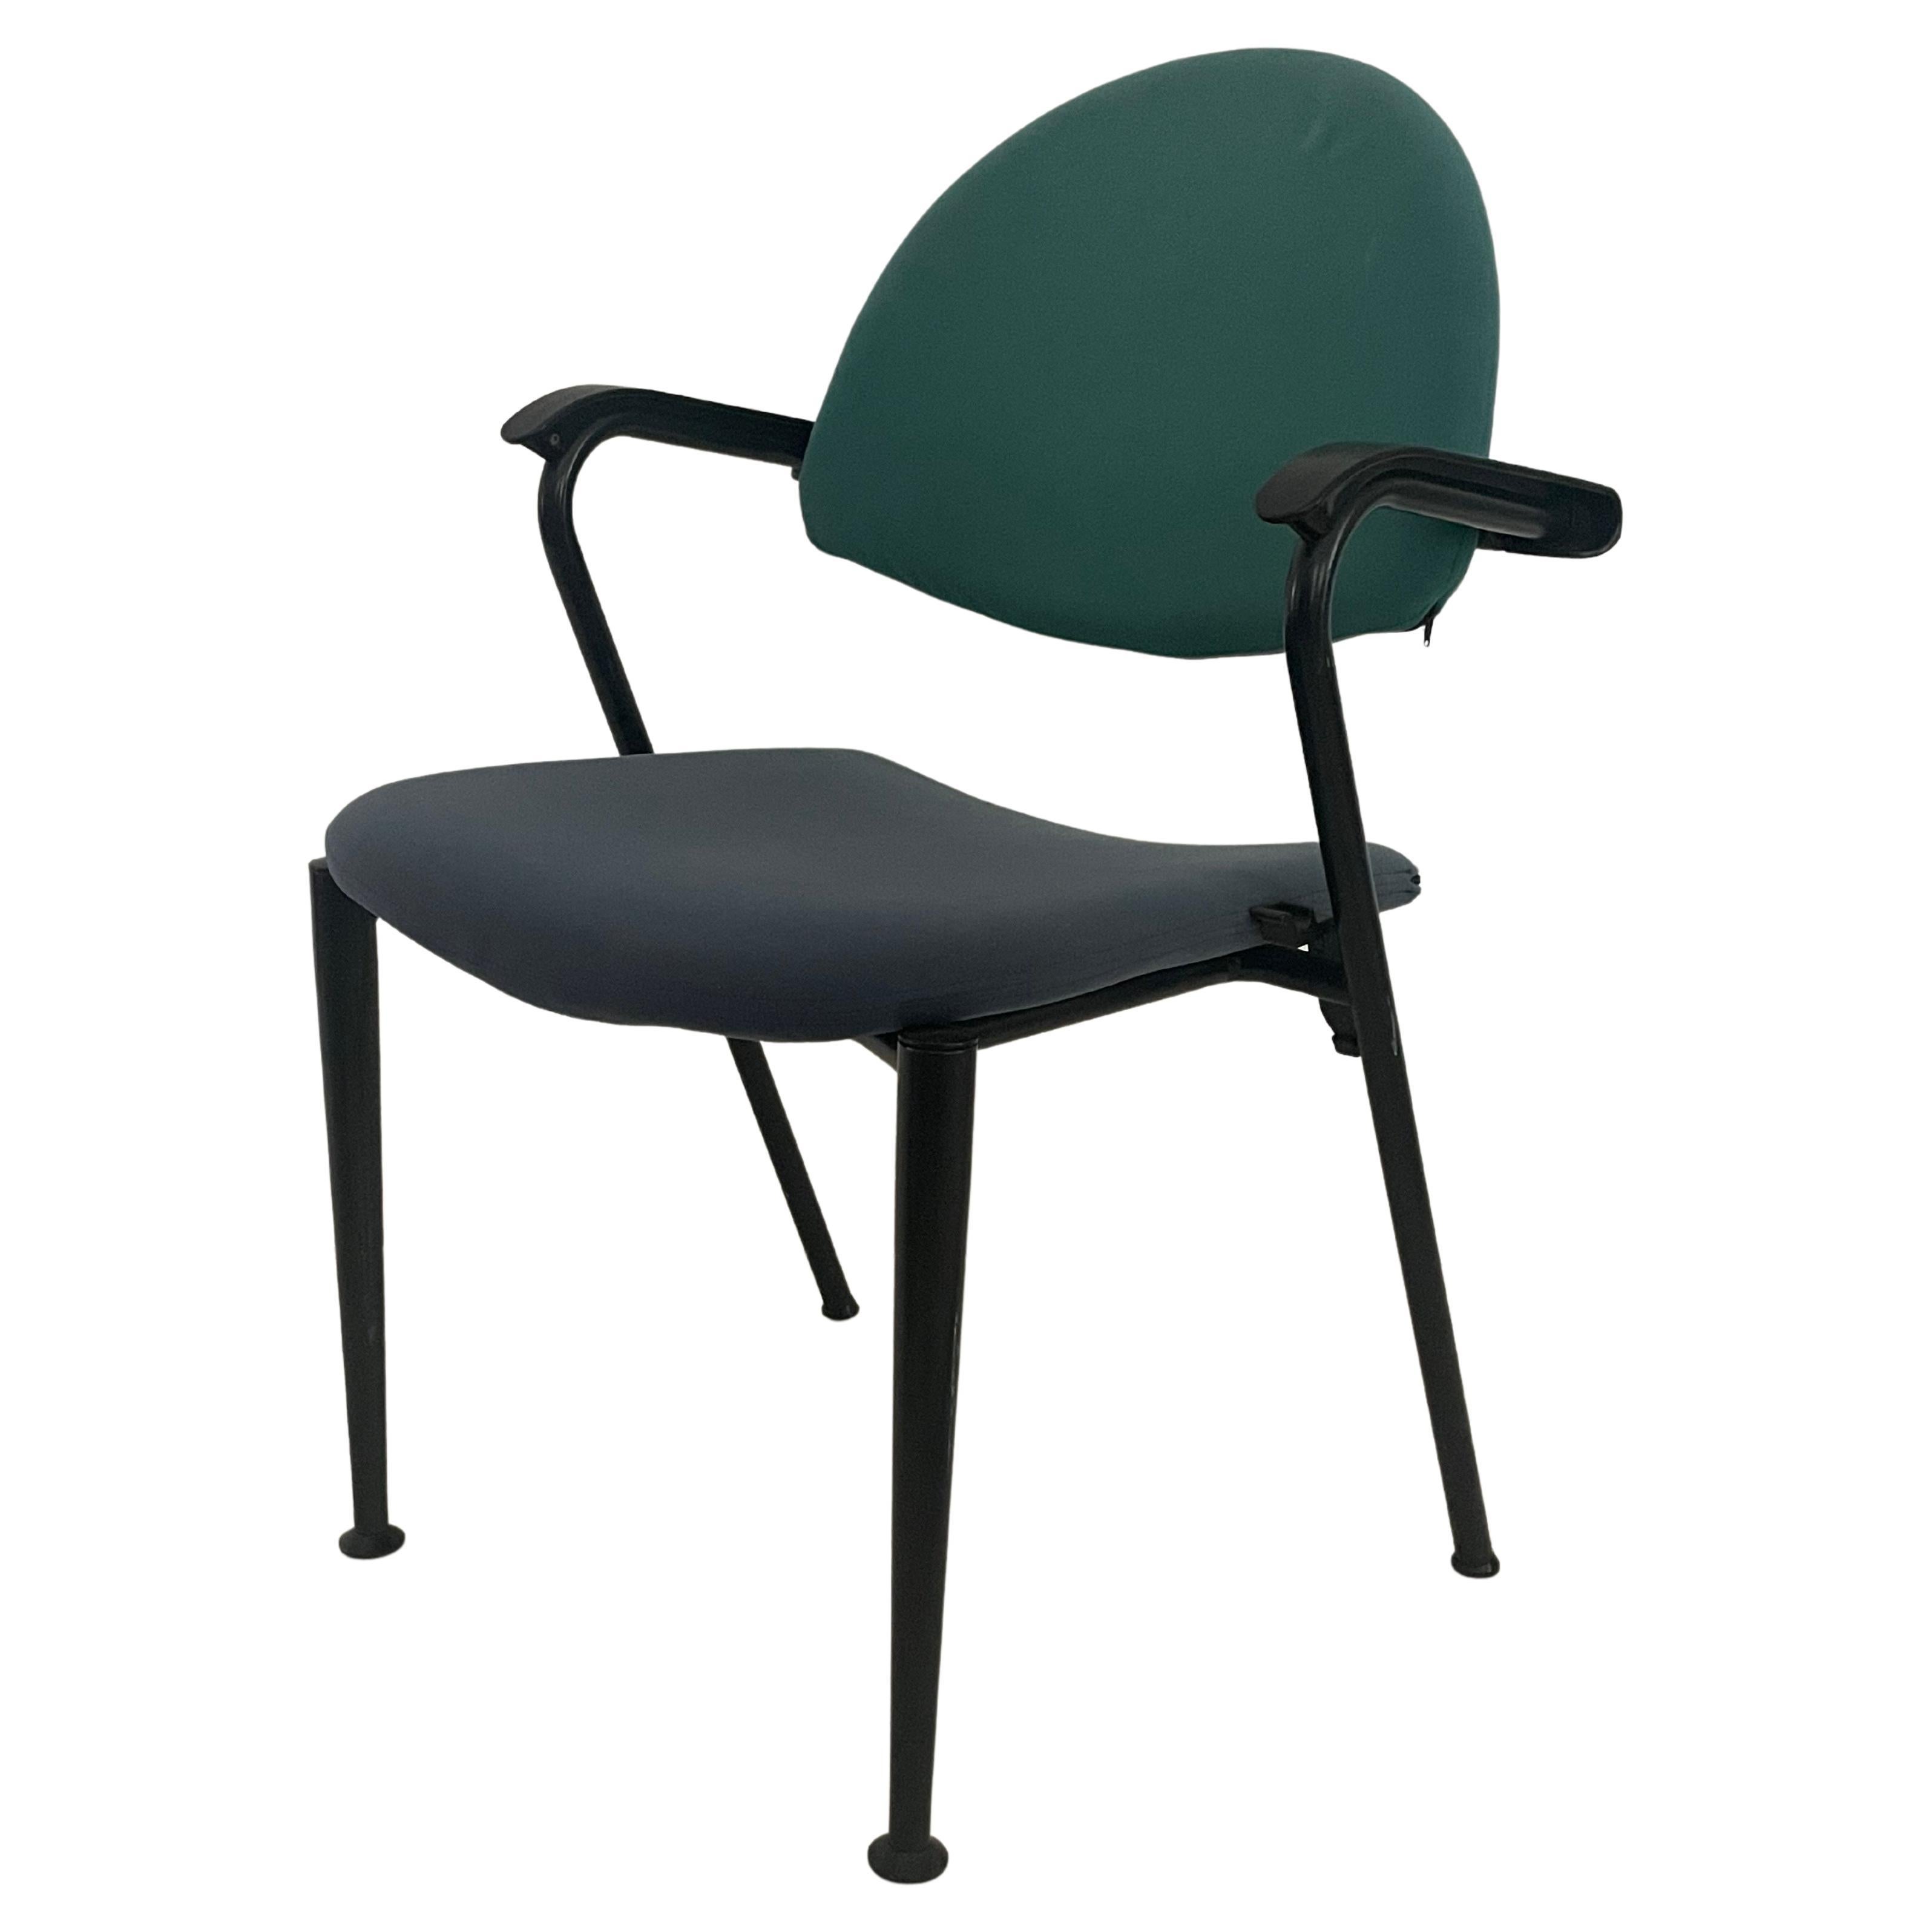 Rare designer chairs of the brand Vitra Bellini Summa in unusual color combination blue / green. The Italian designer Mario Bellini creates several office chairs for the Vitra brand, such as: 